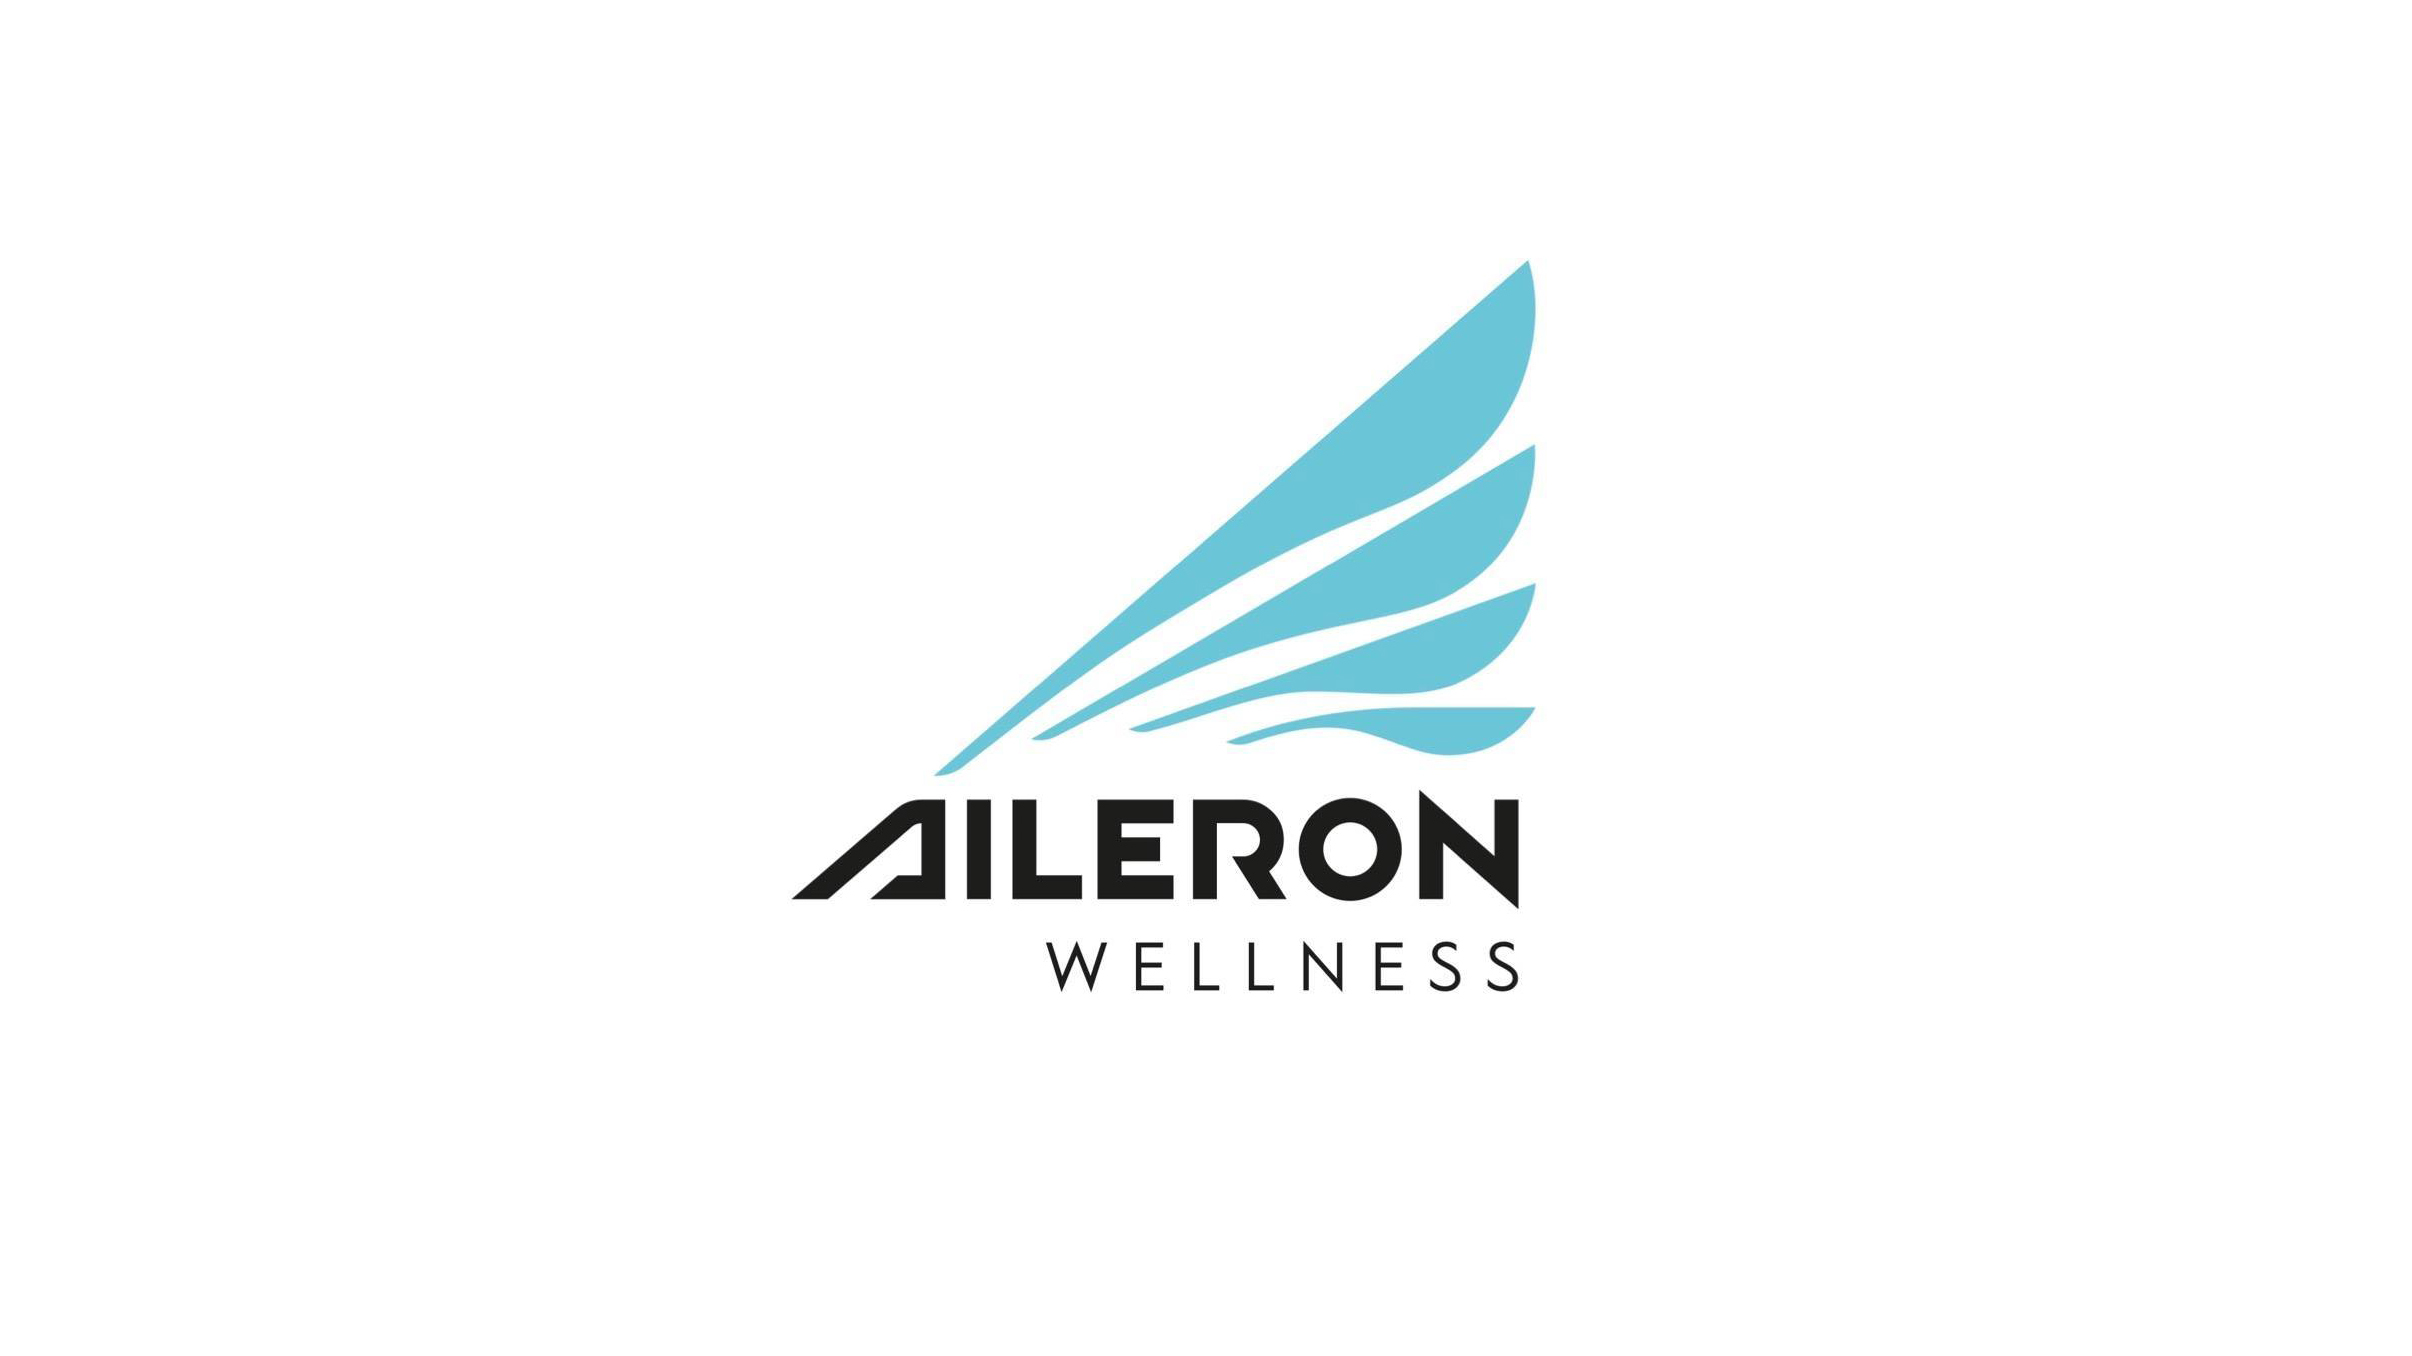 Aileron Wellness logo